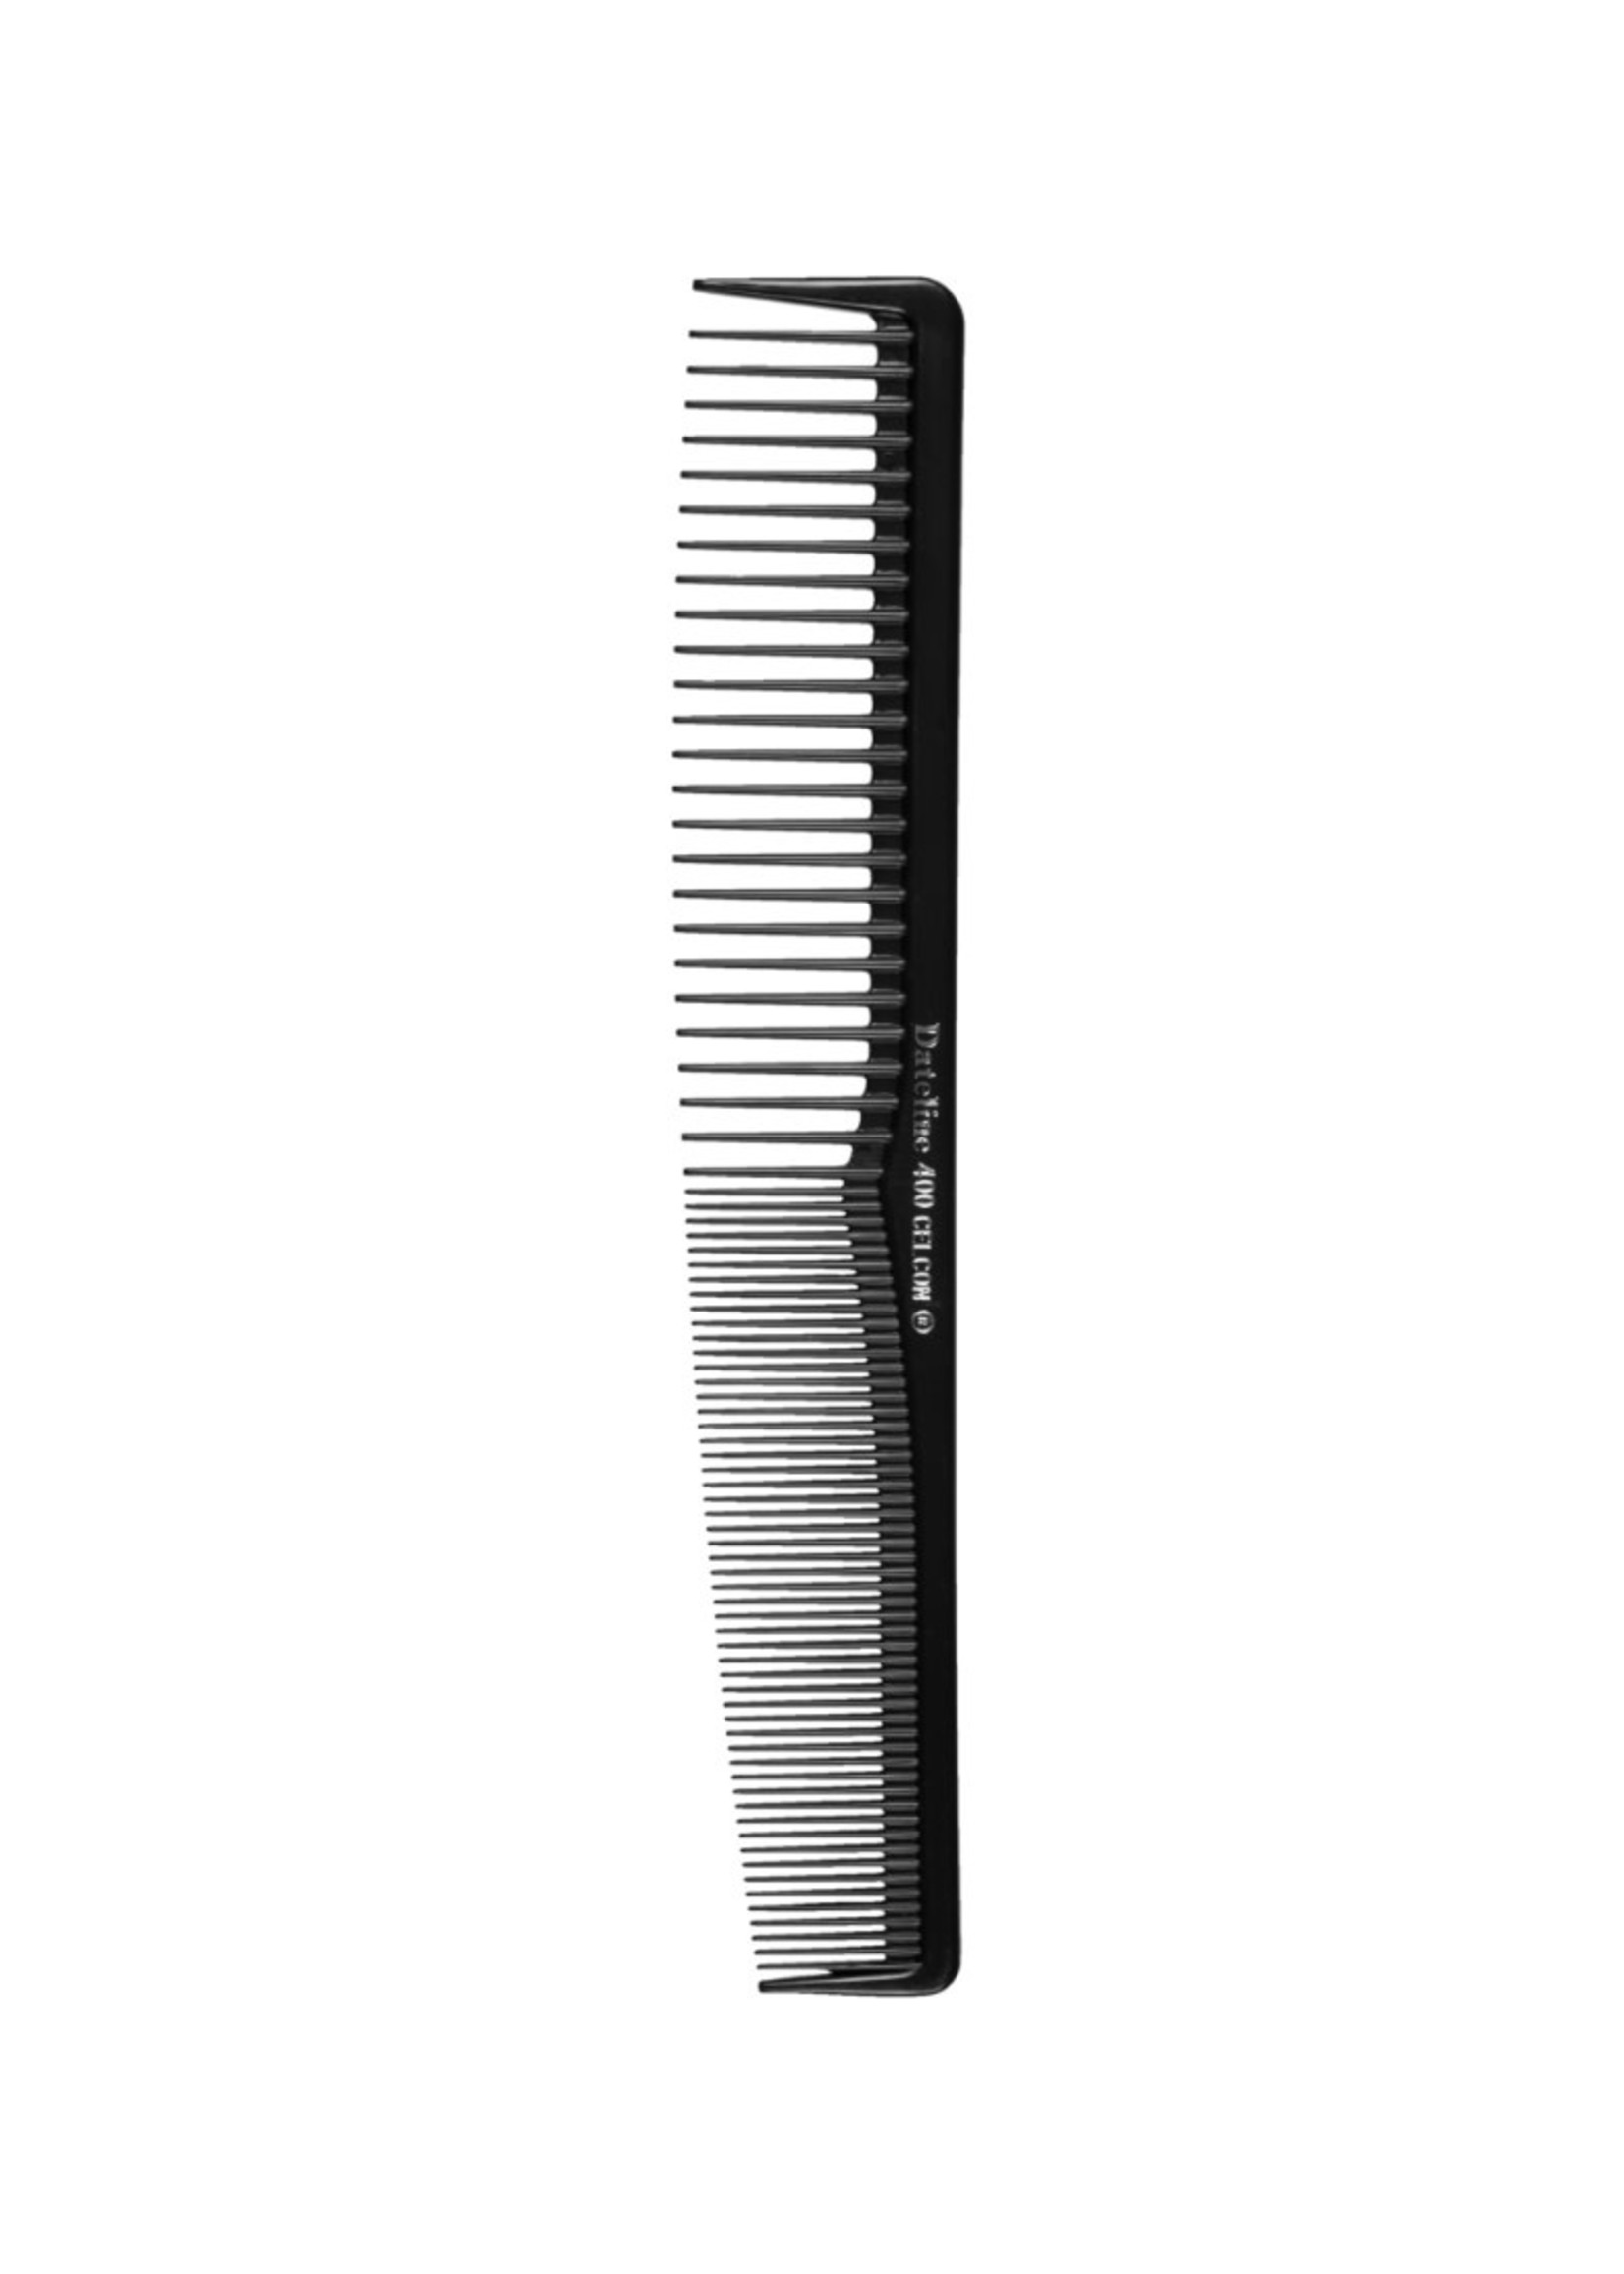 Dateline Dateline Black Celcon 400 Styling Comb